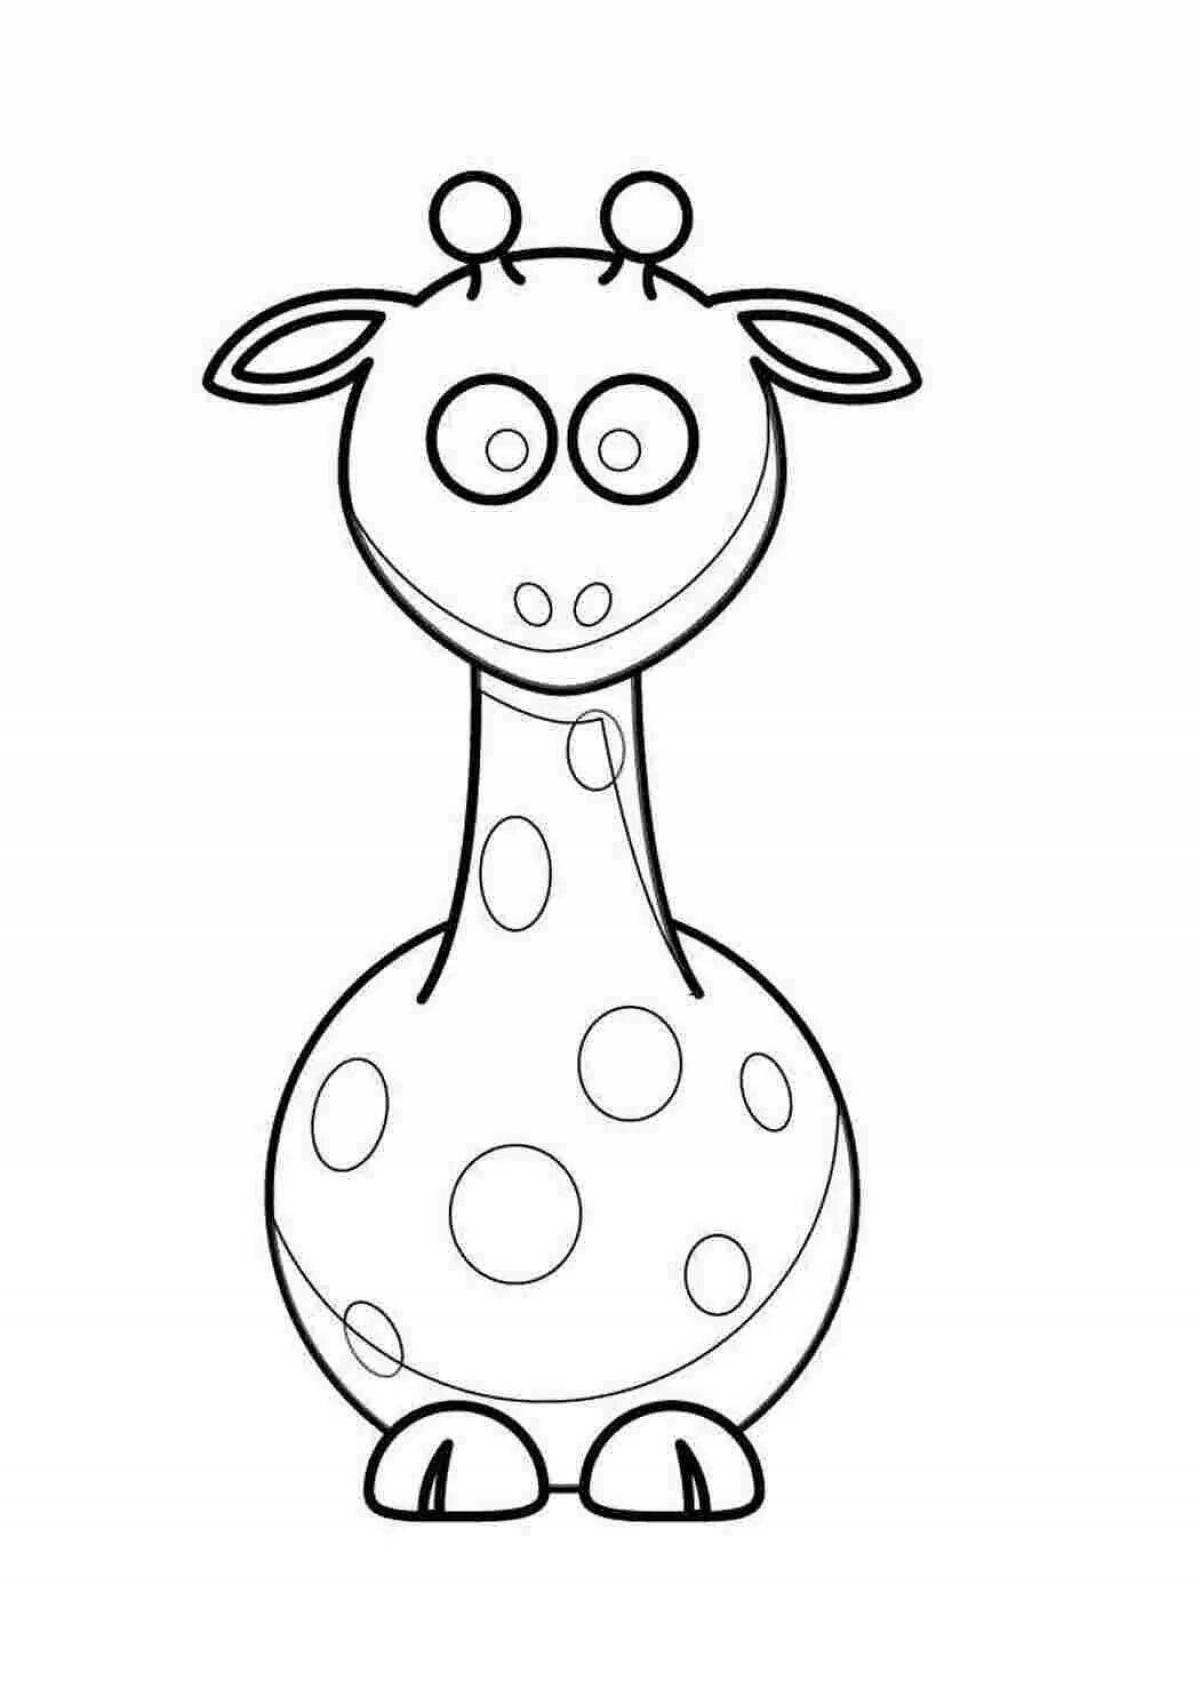 Live coloring giraffe for kids